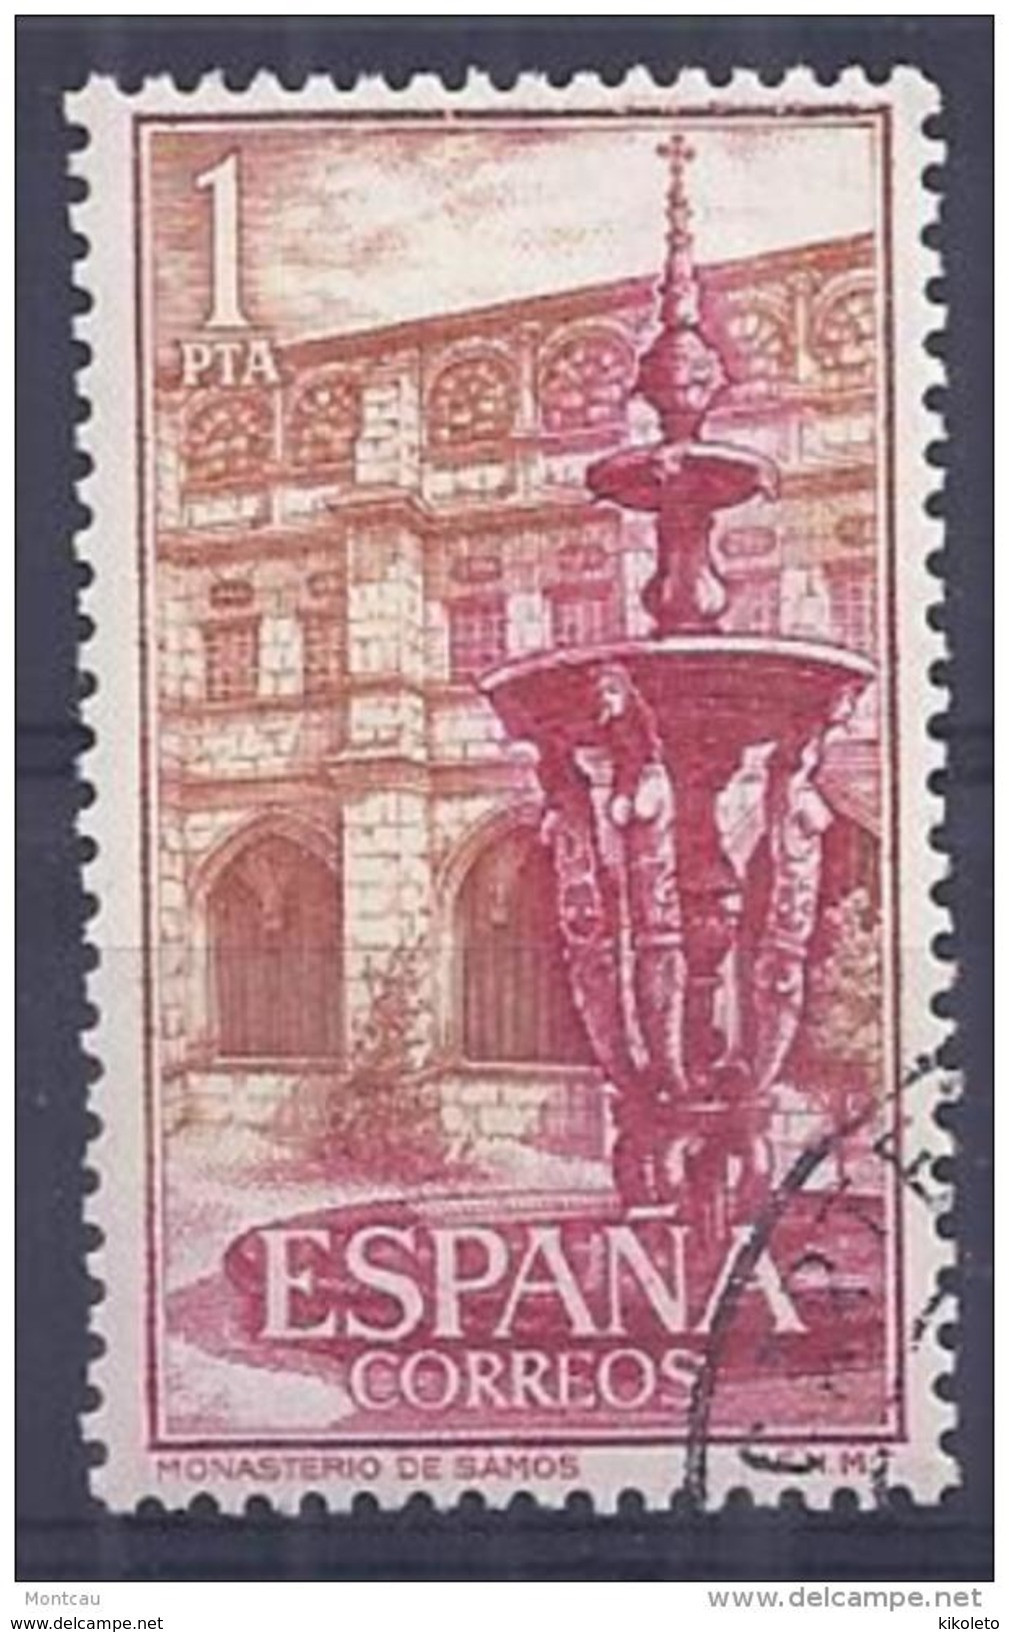 ESPAÑA SPAIN AÑO YEAR 1960 EDIFIL Nº 1323 - USADO (o) USED (o) - REAL MONASTERIO DE SAMOS - 1 Pta - Gebraucht